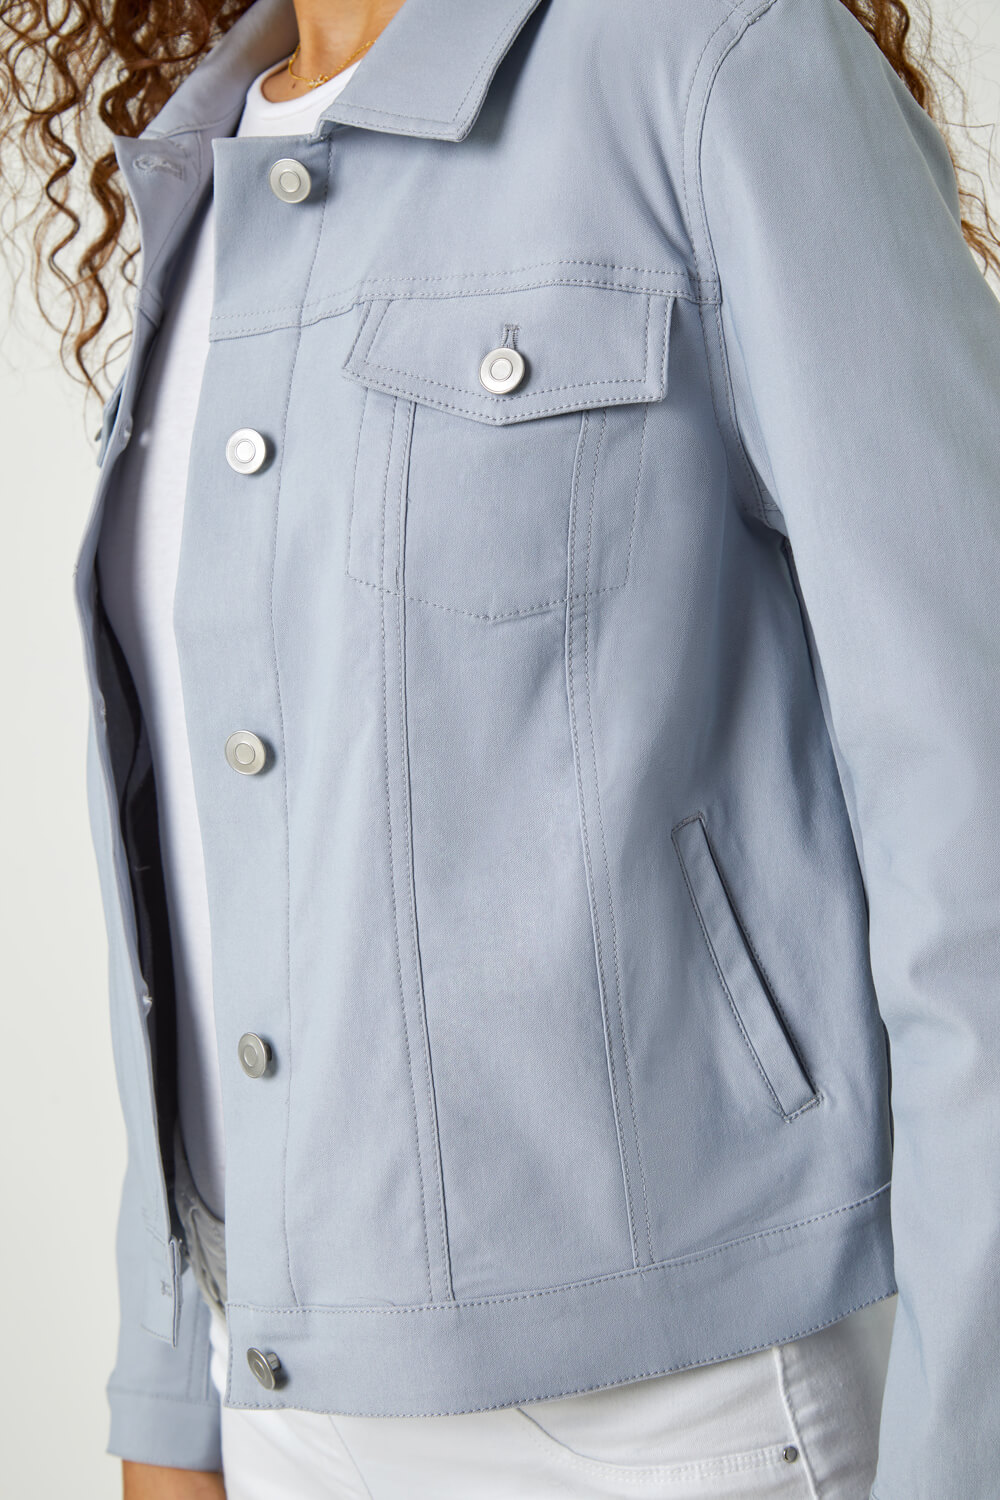 Silver Stretch Pocket Detail Jacket, Image 5 of 5